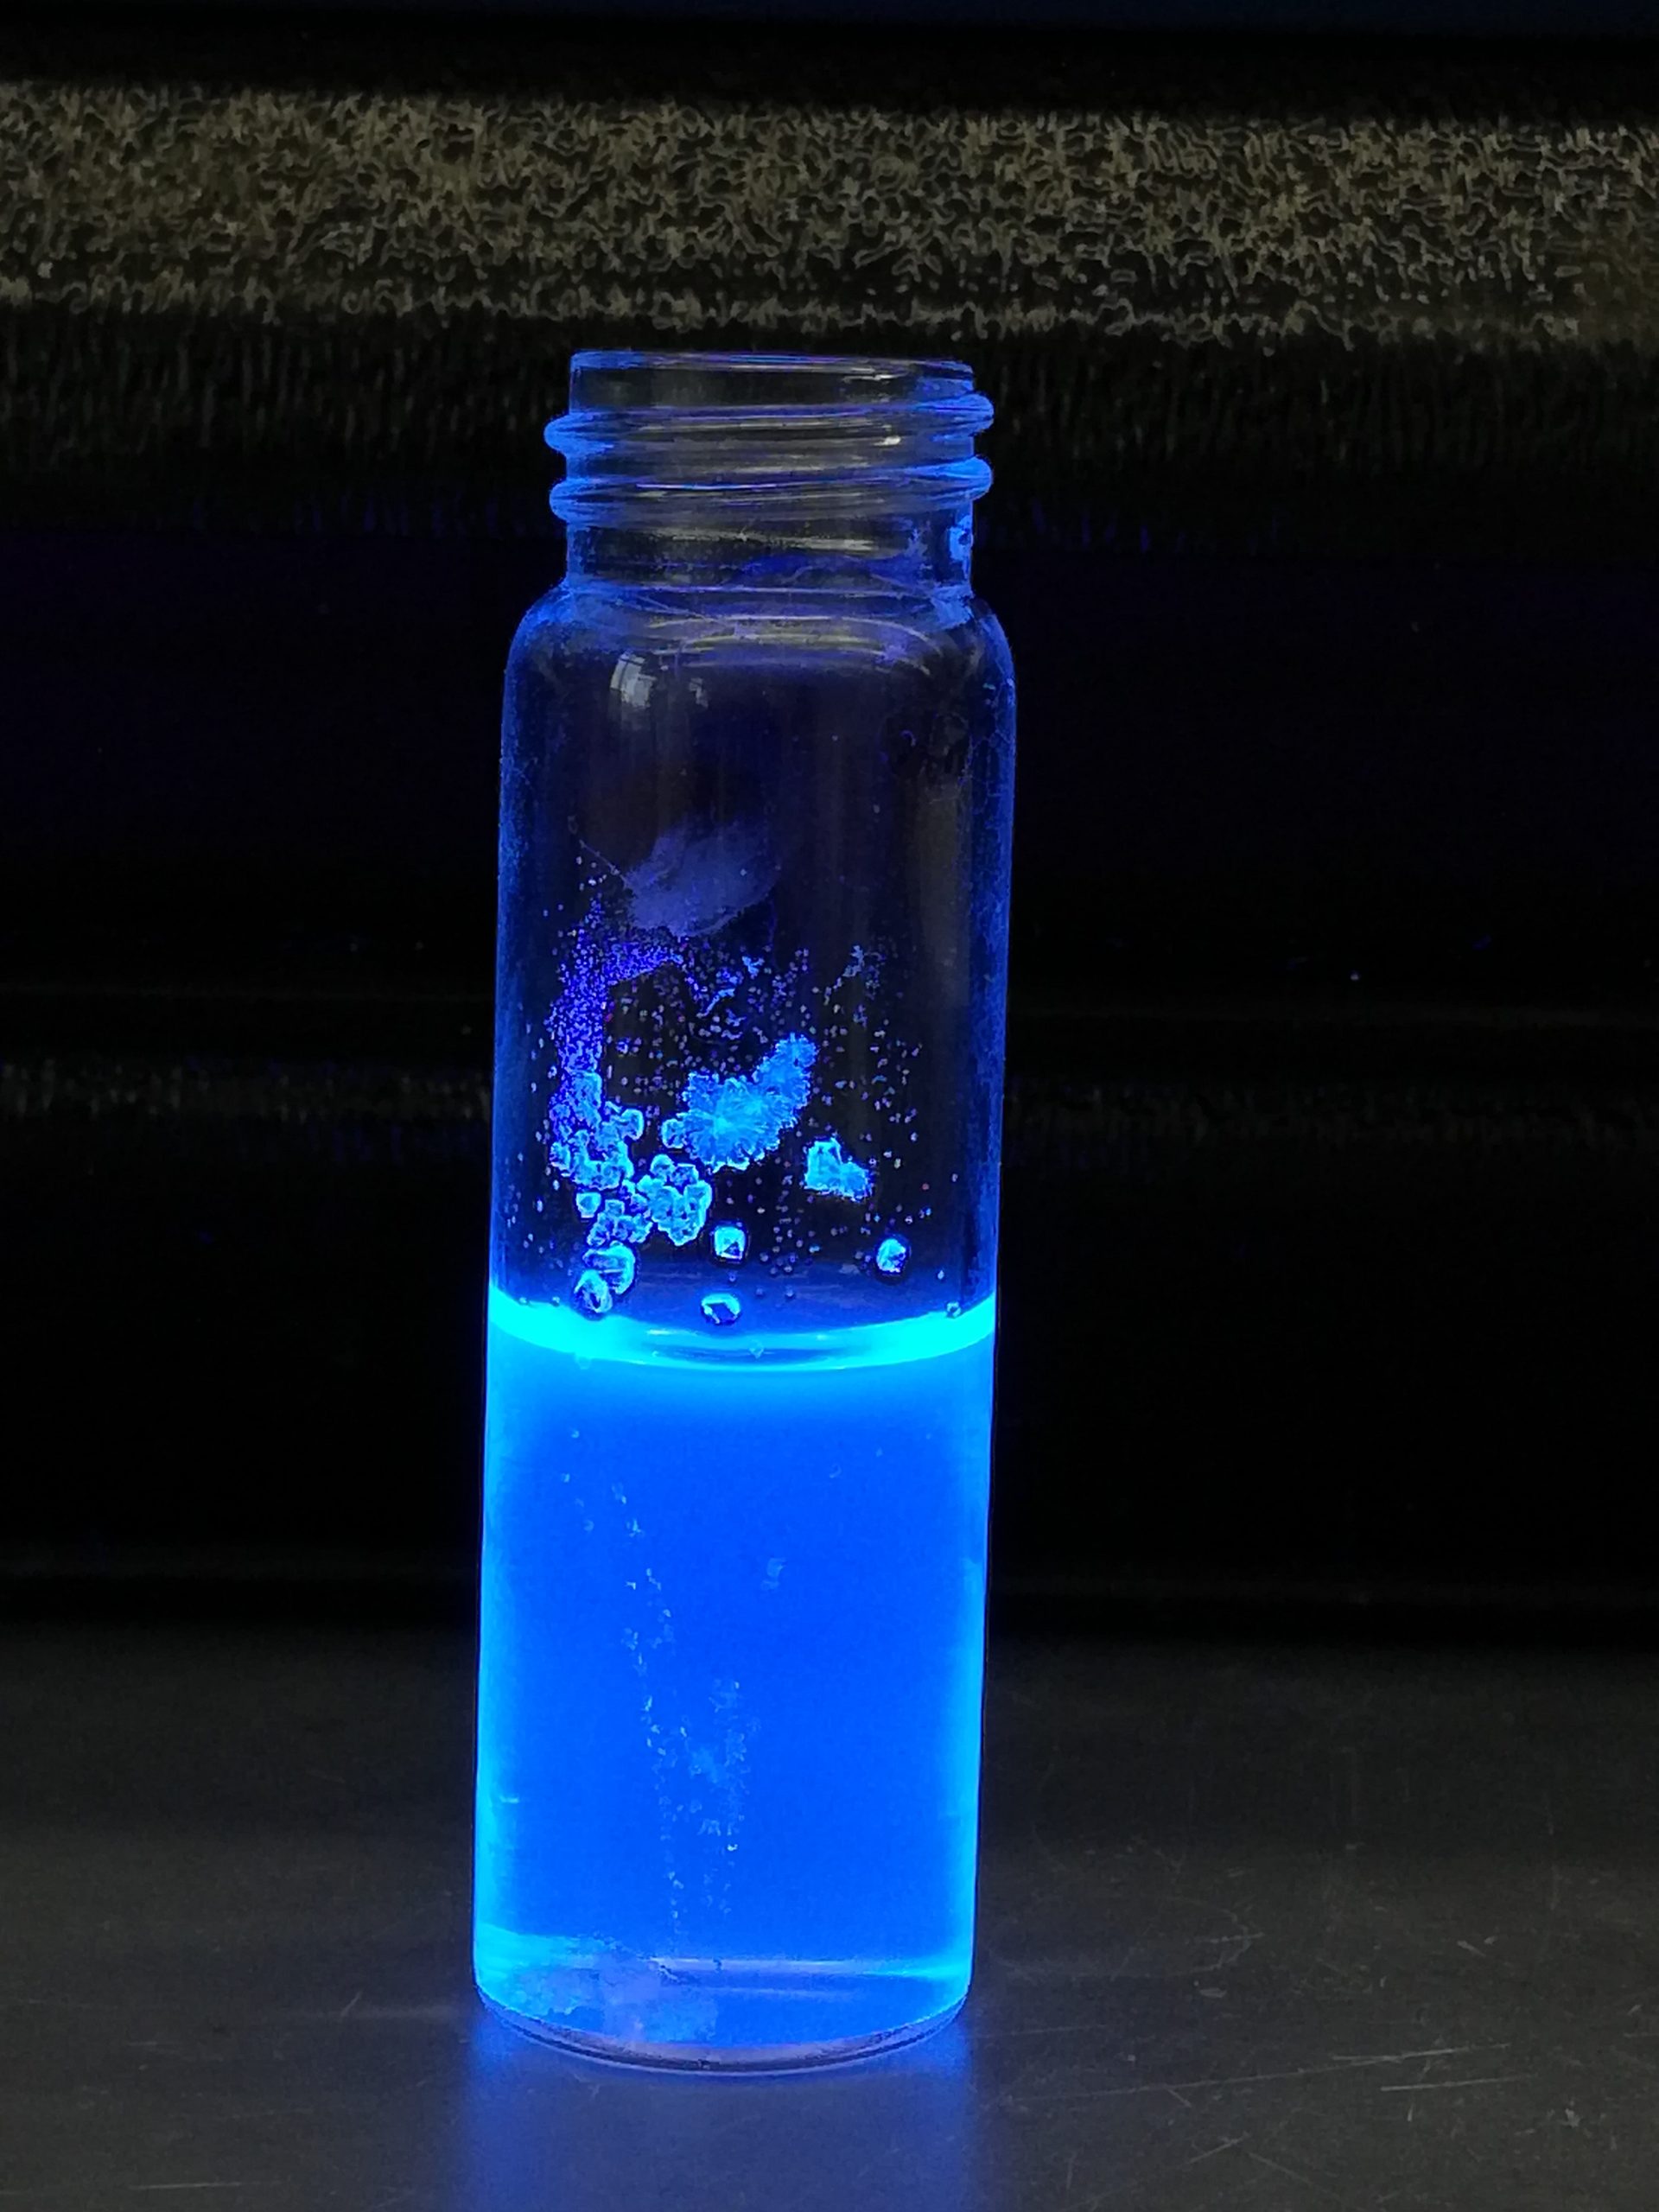 A solution containing Cerium, a rare earth element, under UV light